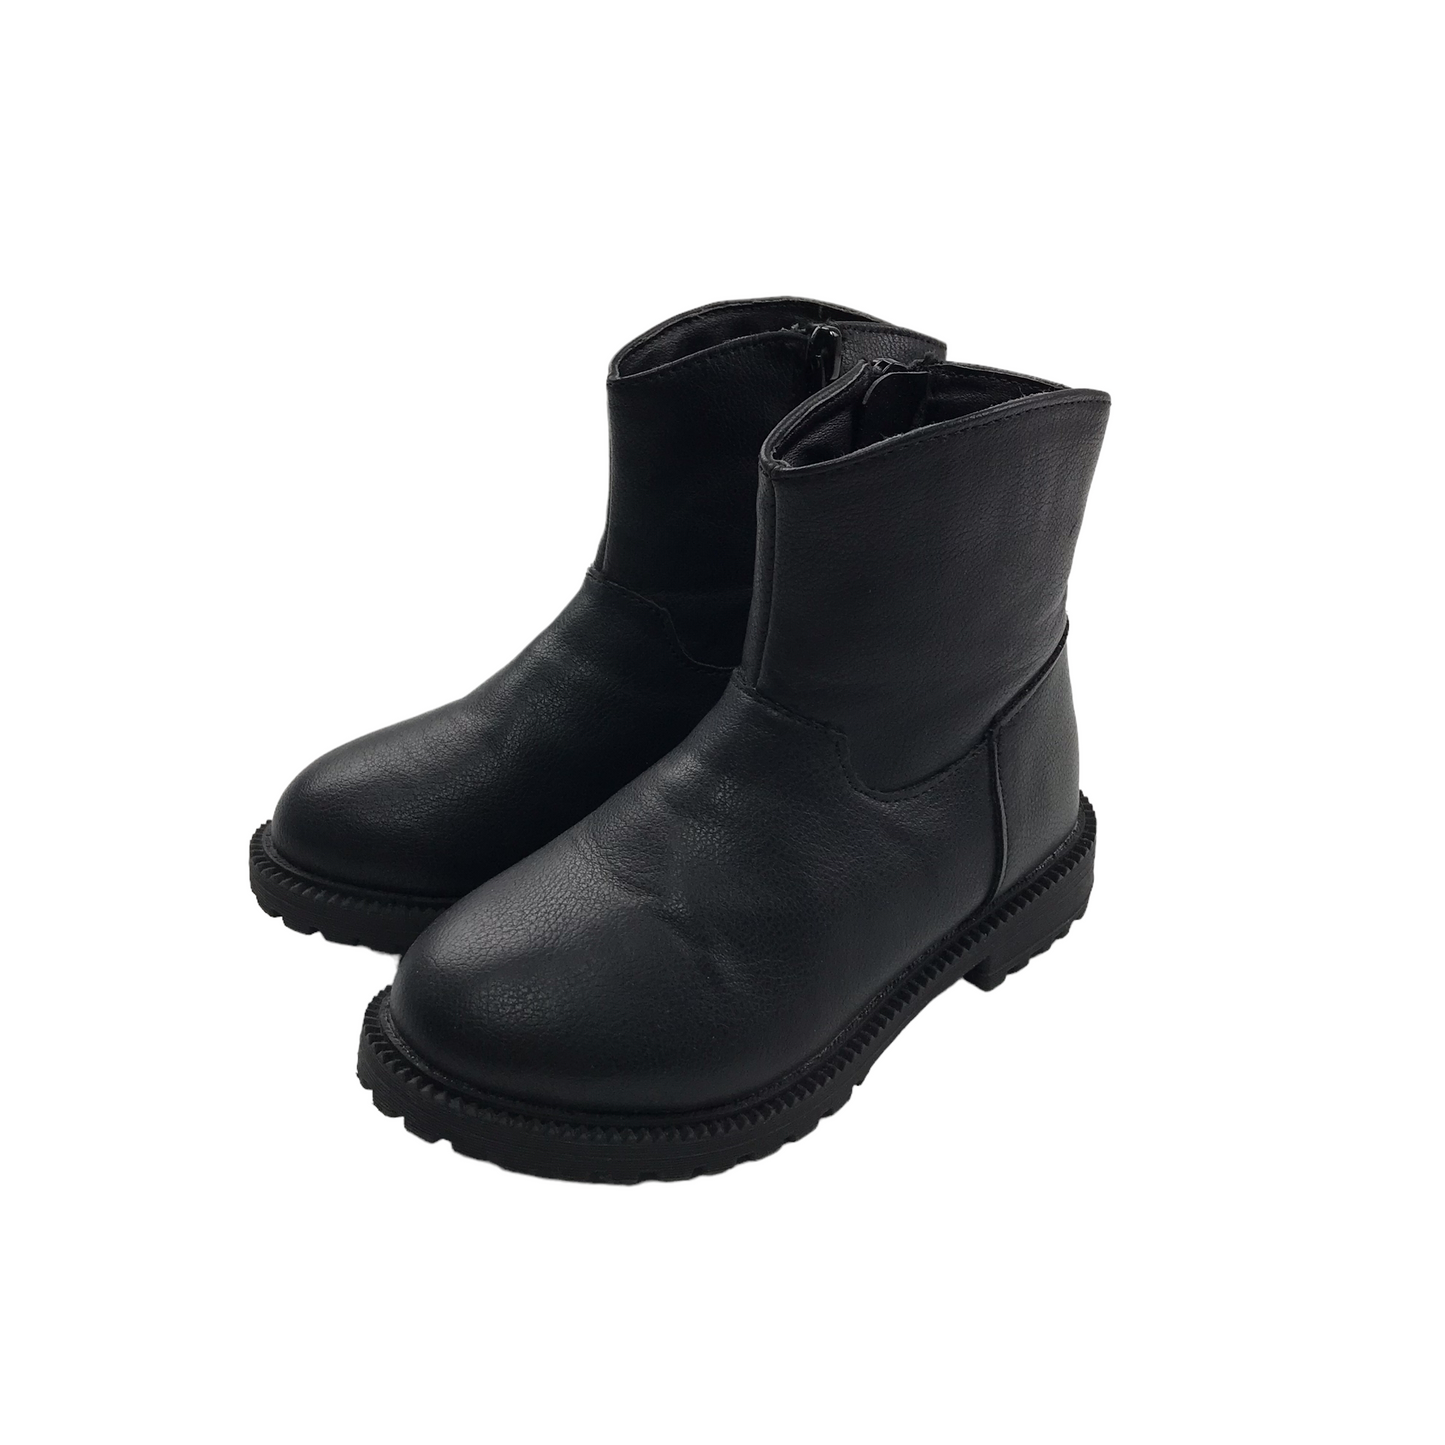 Next Black Leather-like Boots Shoe Size 9 junior